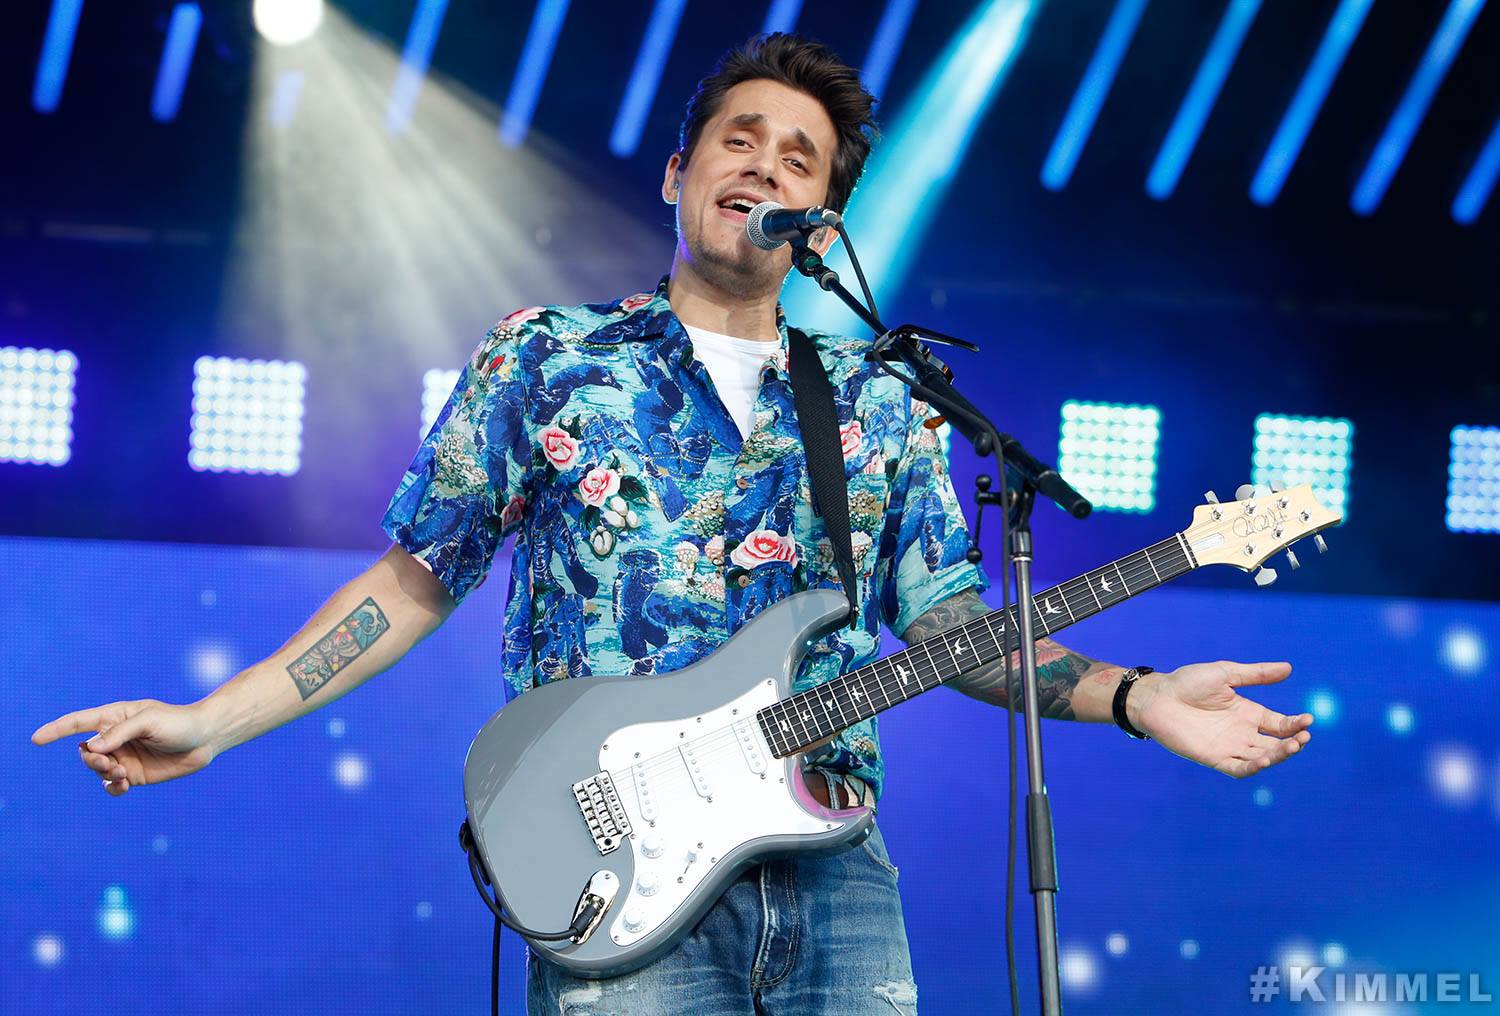 Veja John Mayer apresentando "New Light" no programa Jimmy Kimmel Live